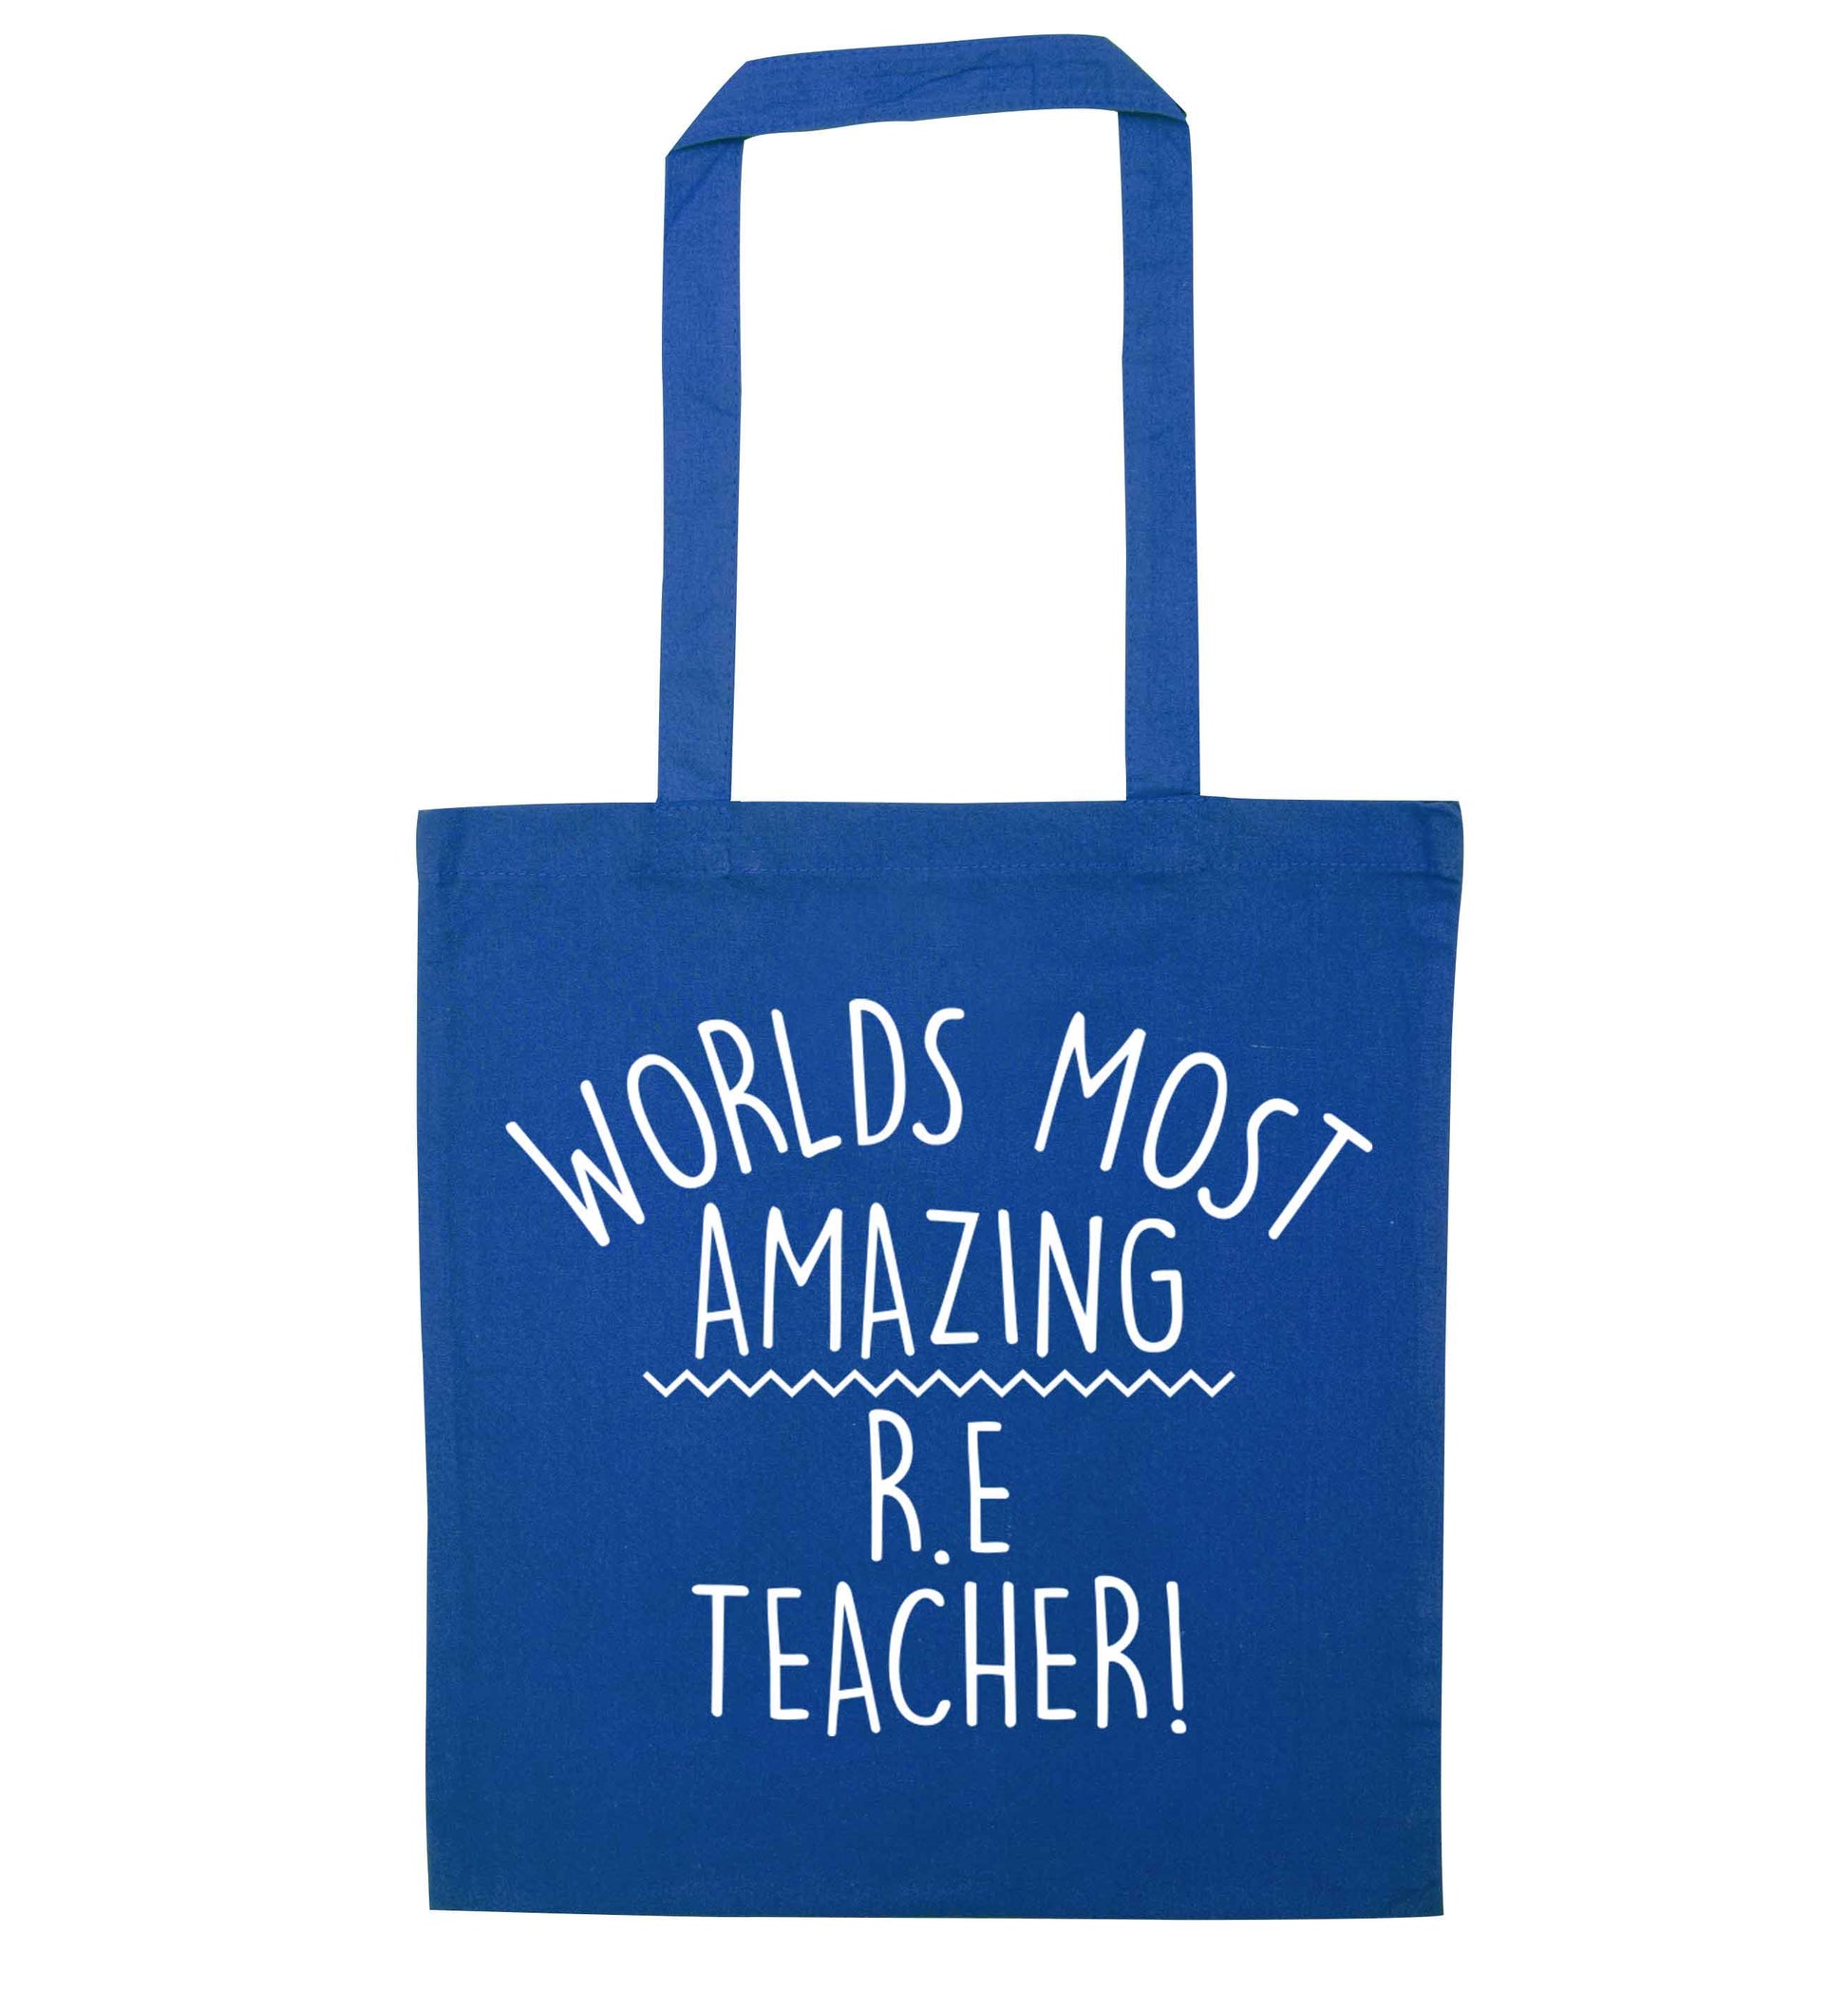 Worlds most amazing R.E teacher blue tote bag